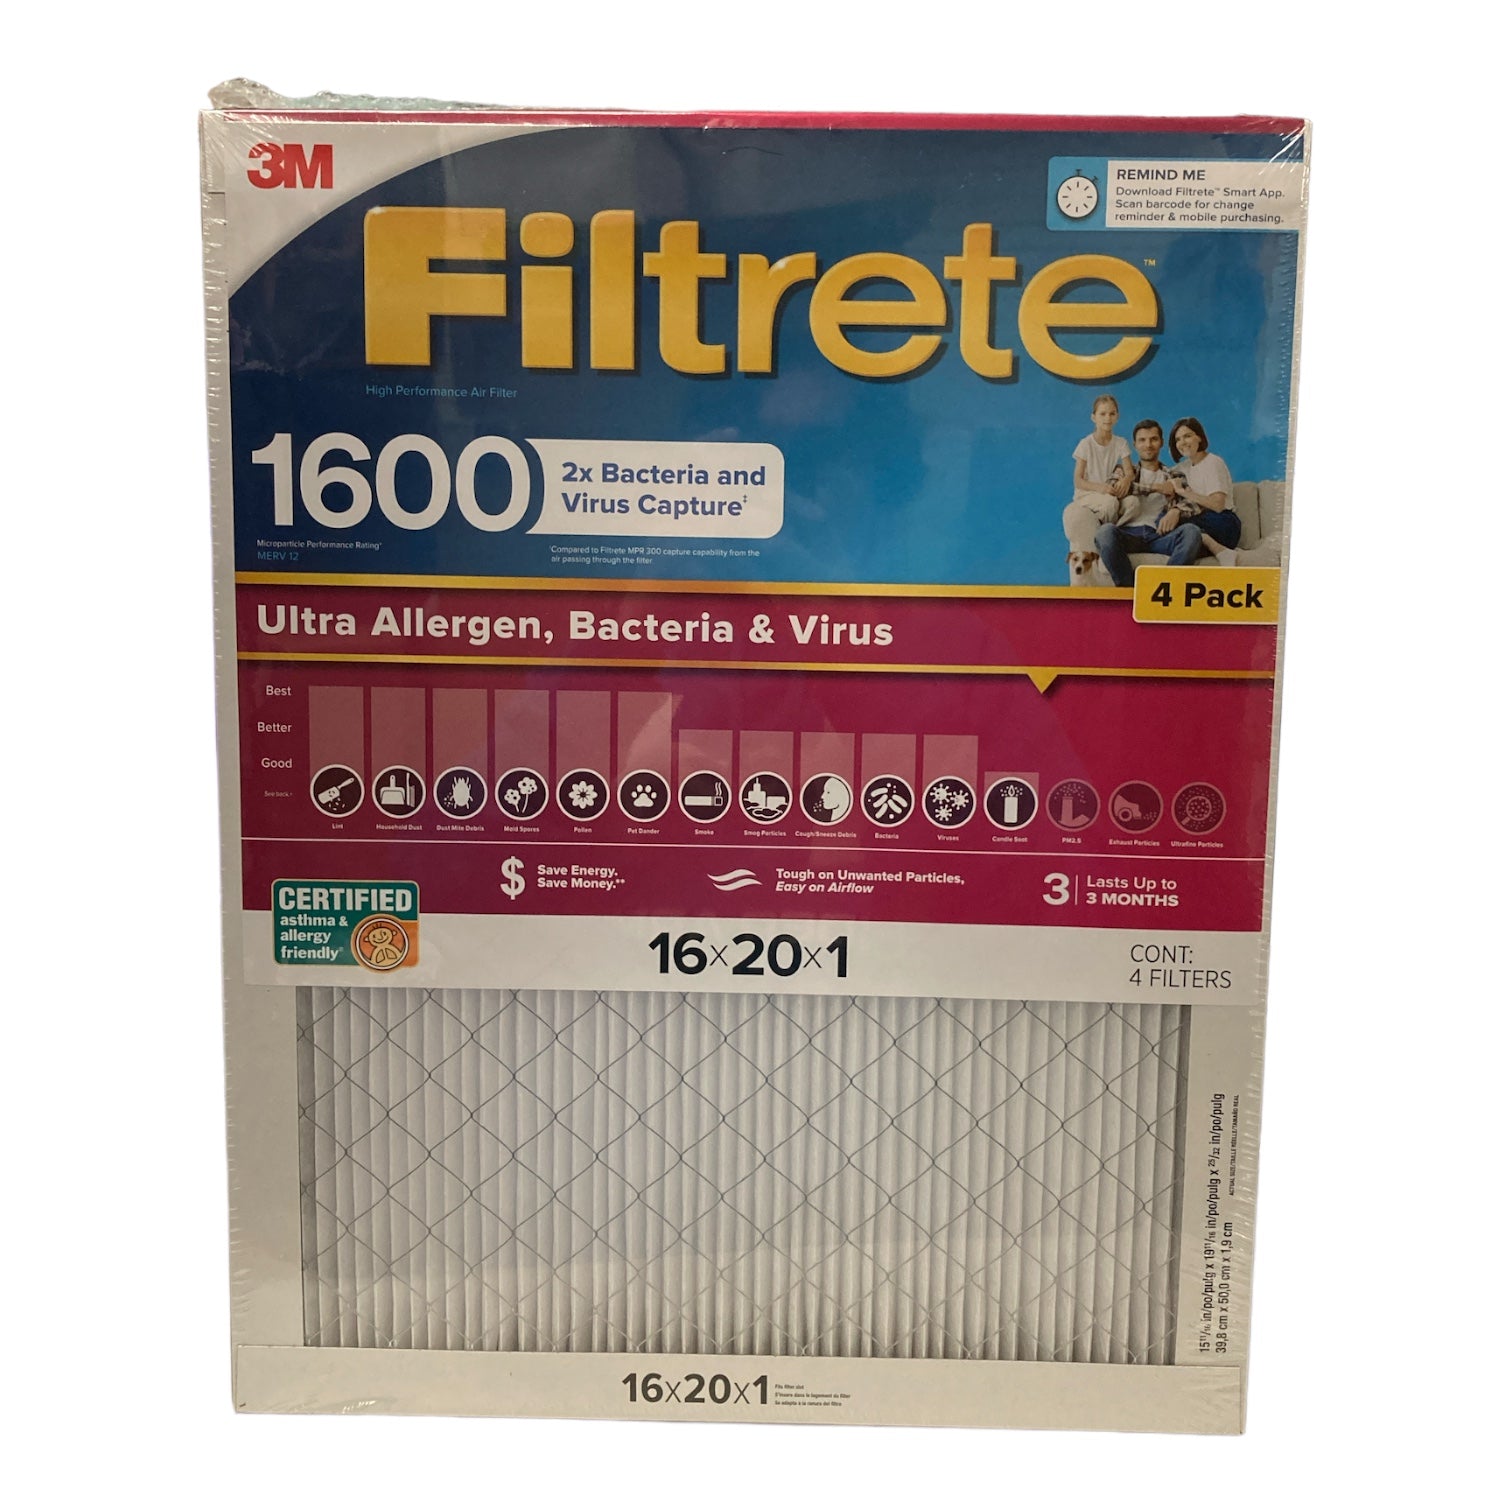 Filtrete 1600 MPR Ultra Allergen 2X Bacteria & Virus Filter, 16x20x1, 4 Pack